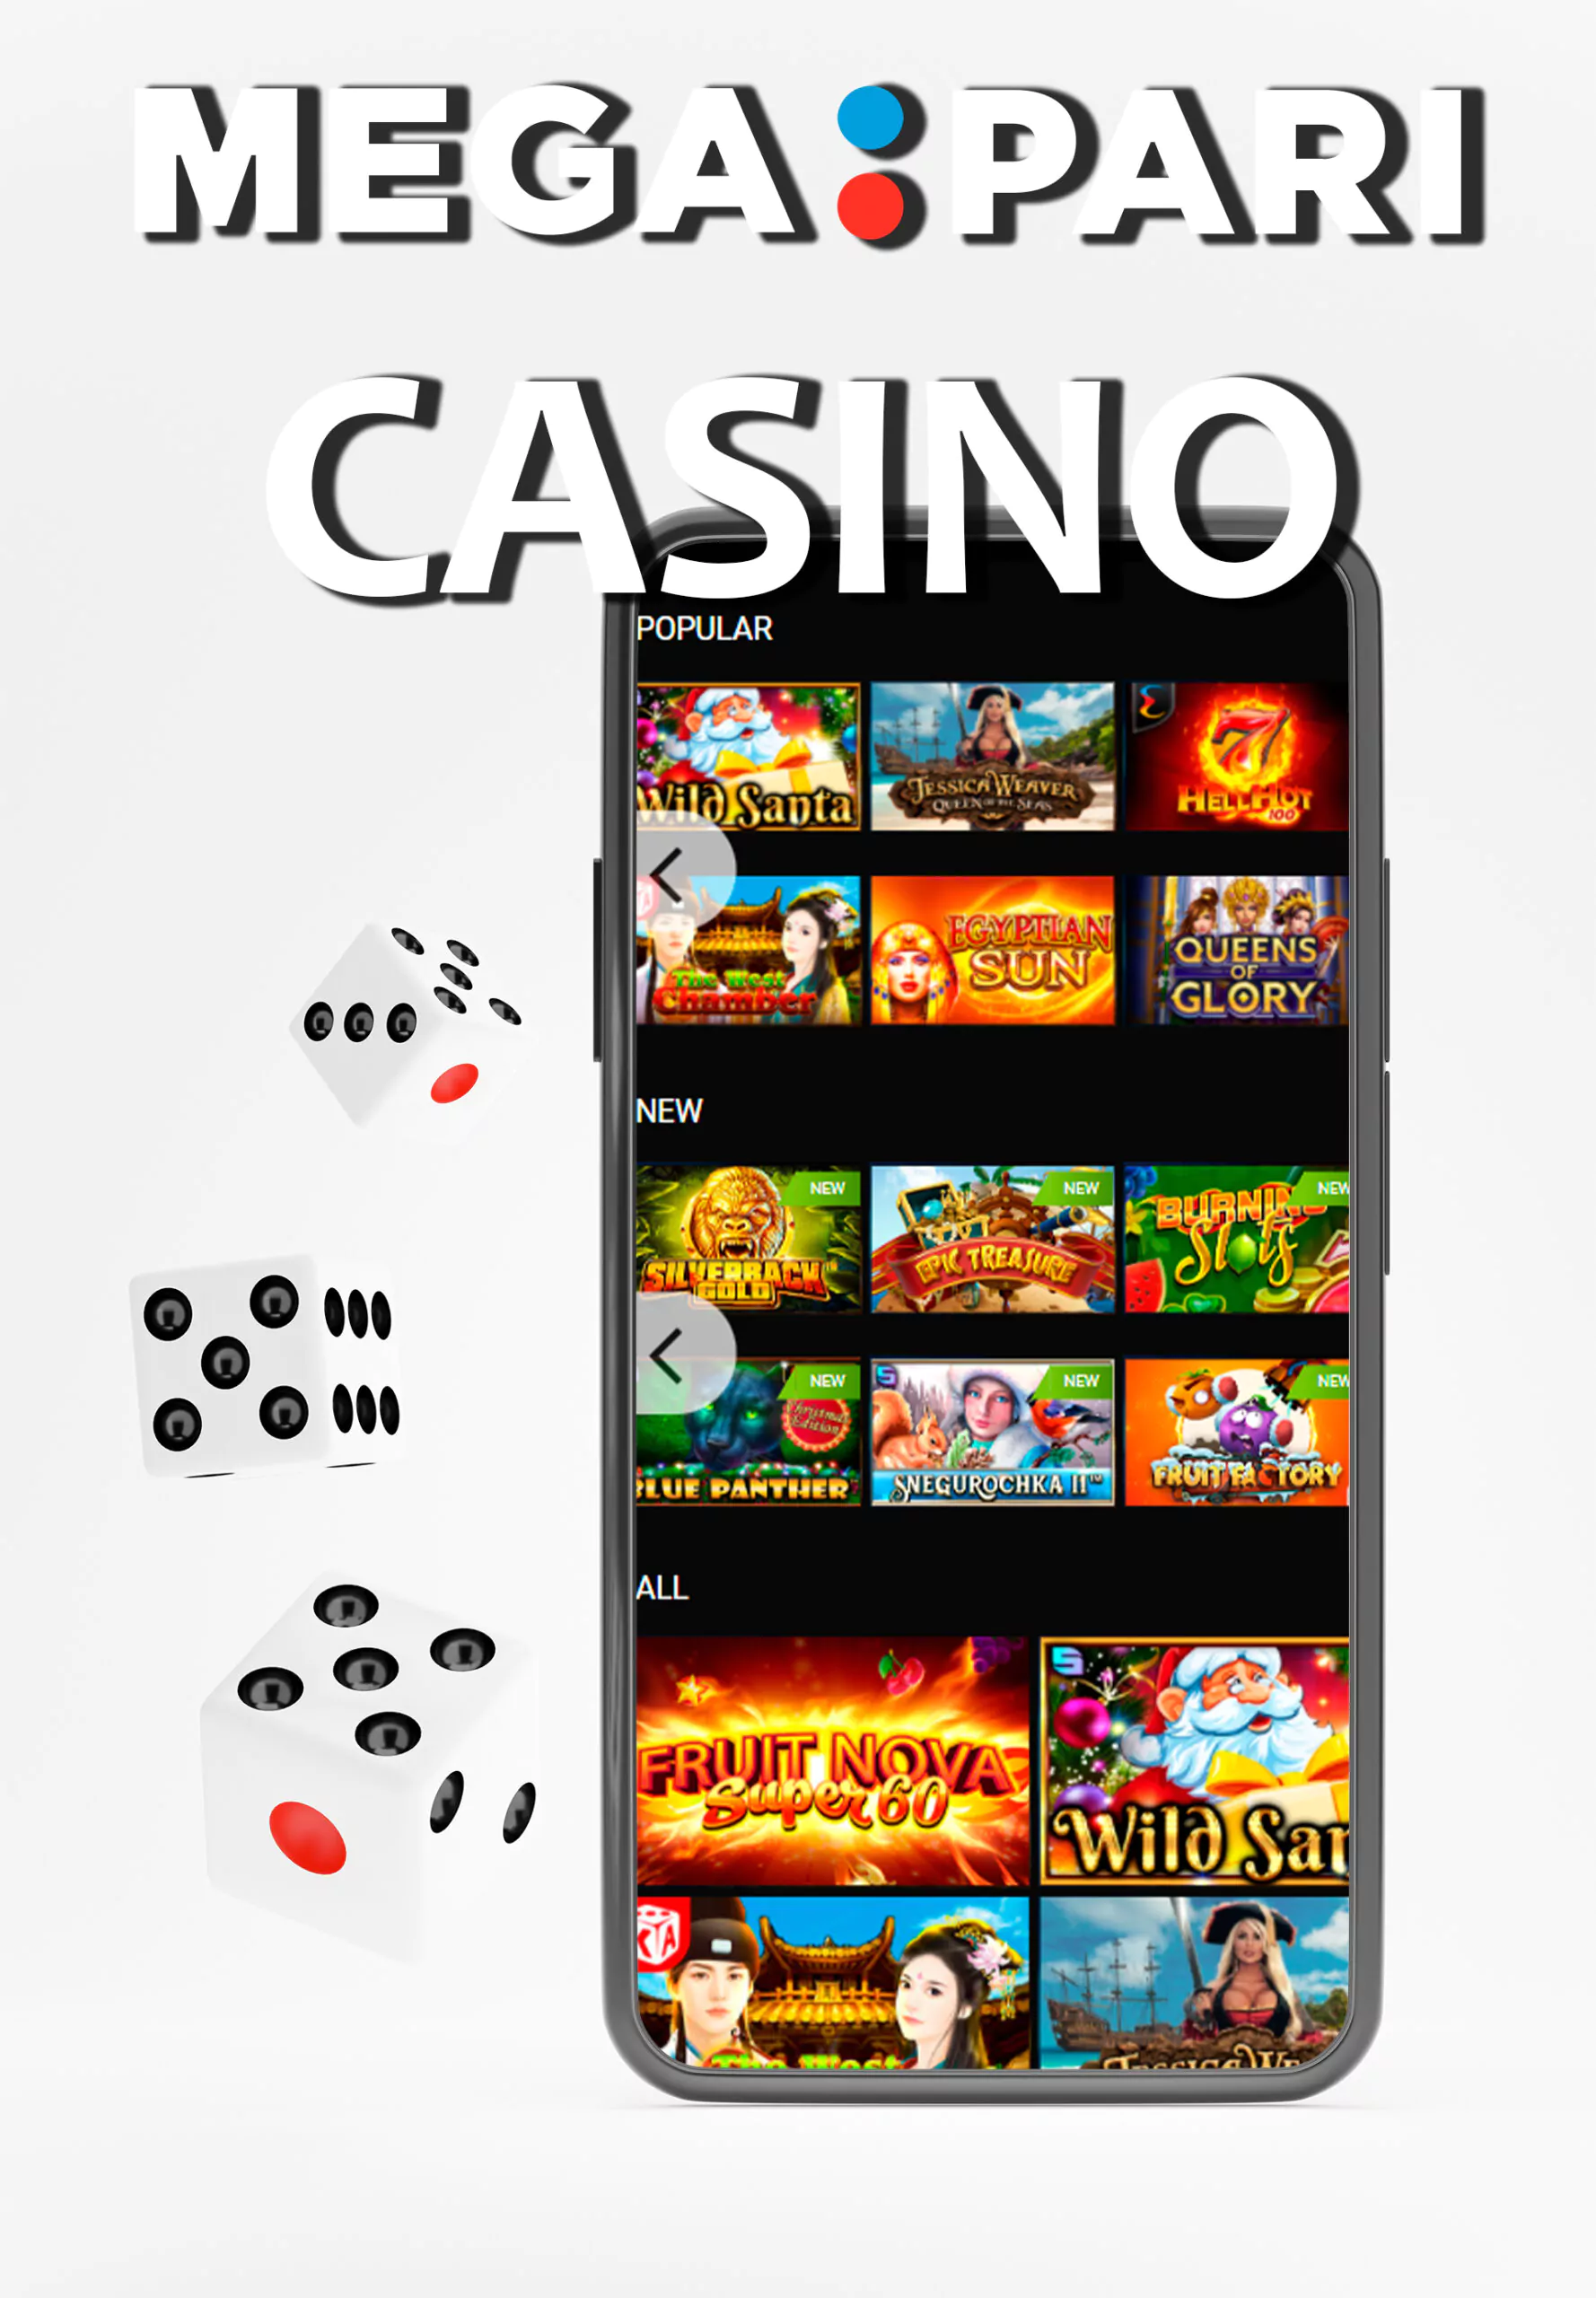 Megapari has also the mobile online casino.